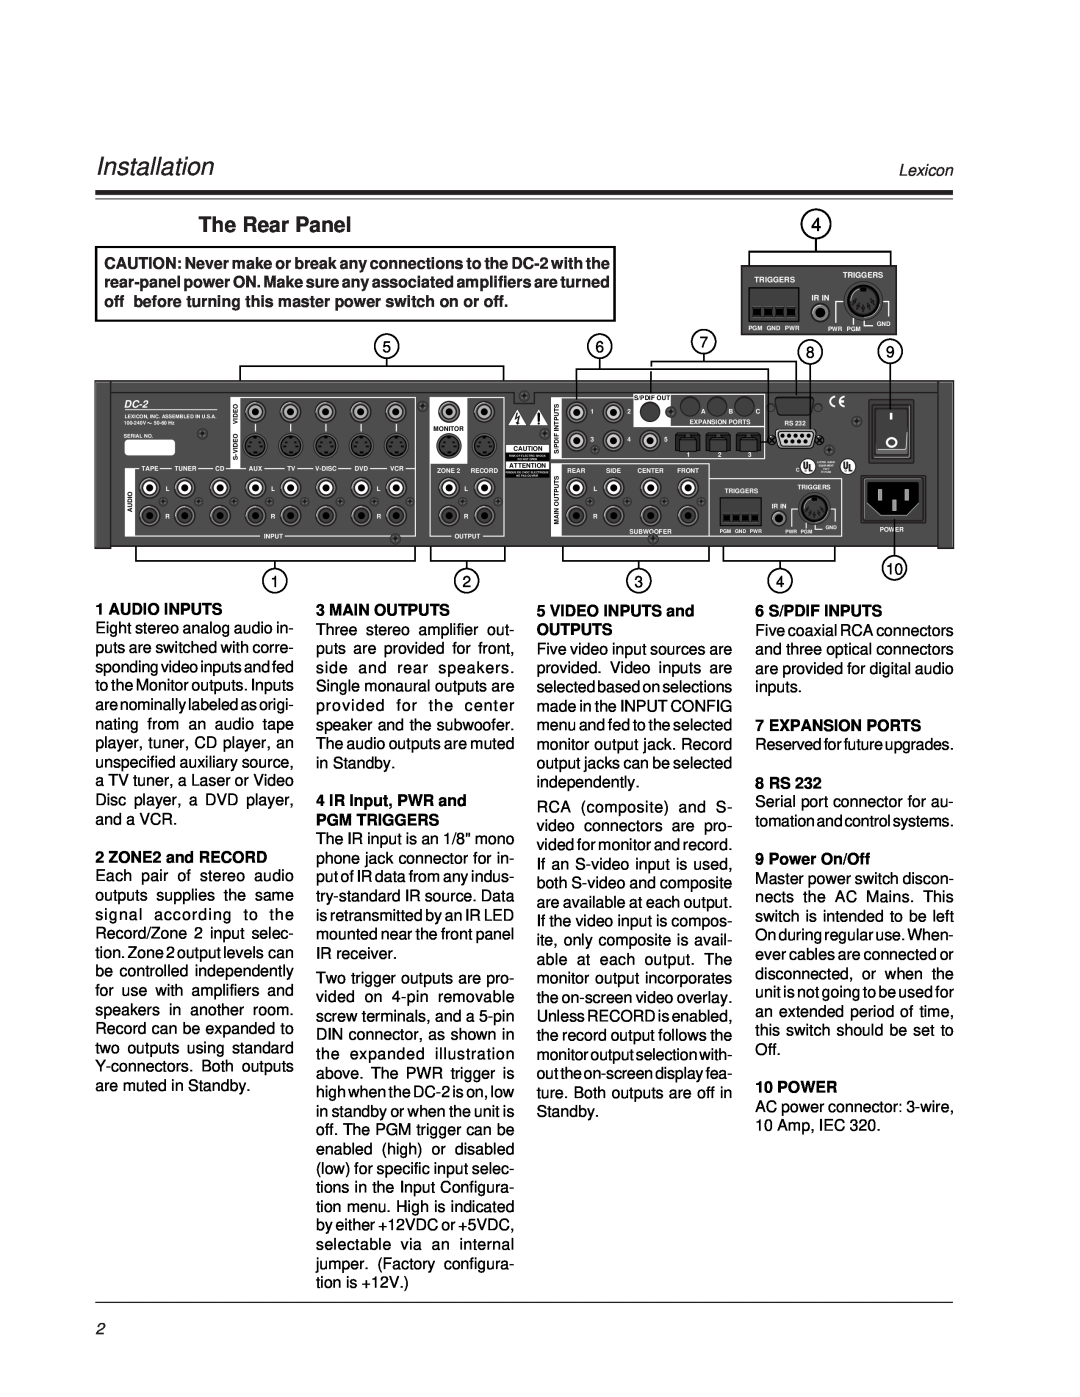 Lexicon DC-2 owner manual Installation, The Rear Panel, Lexicon 